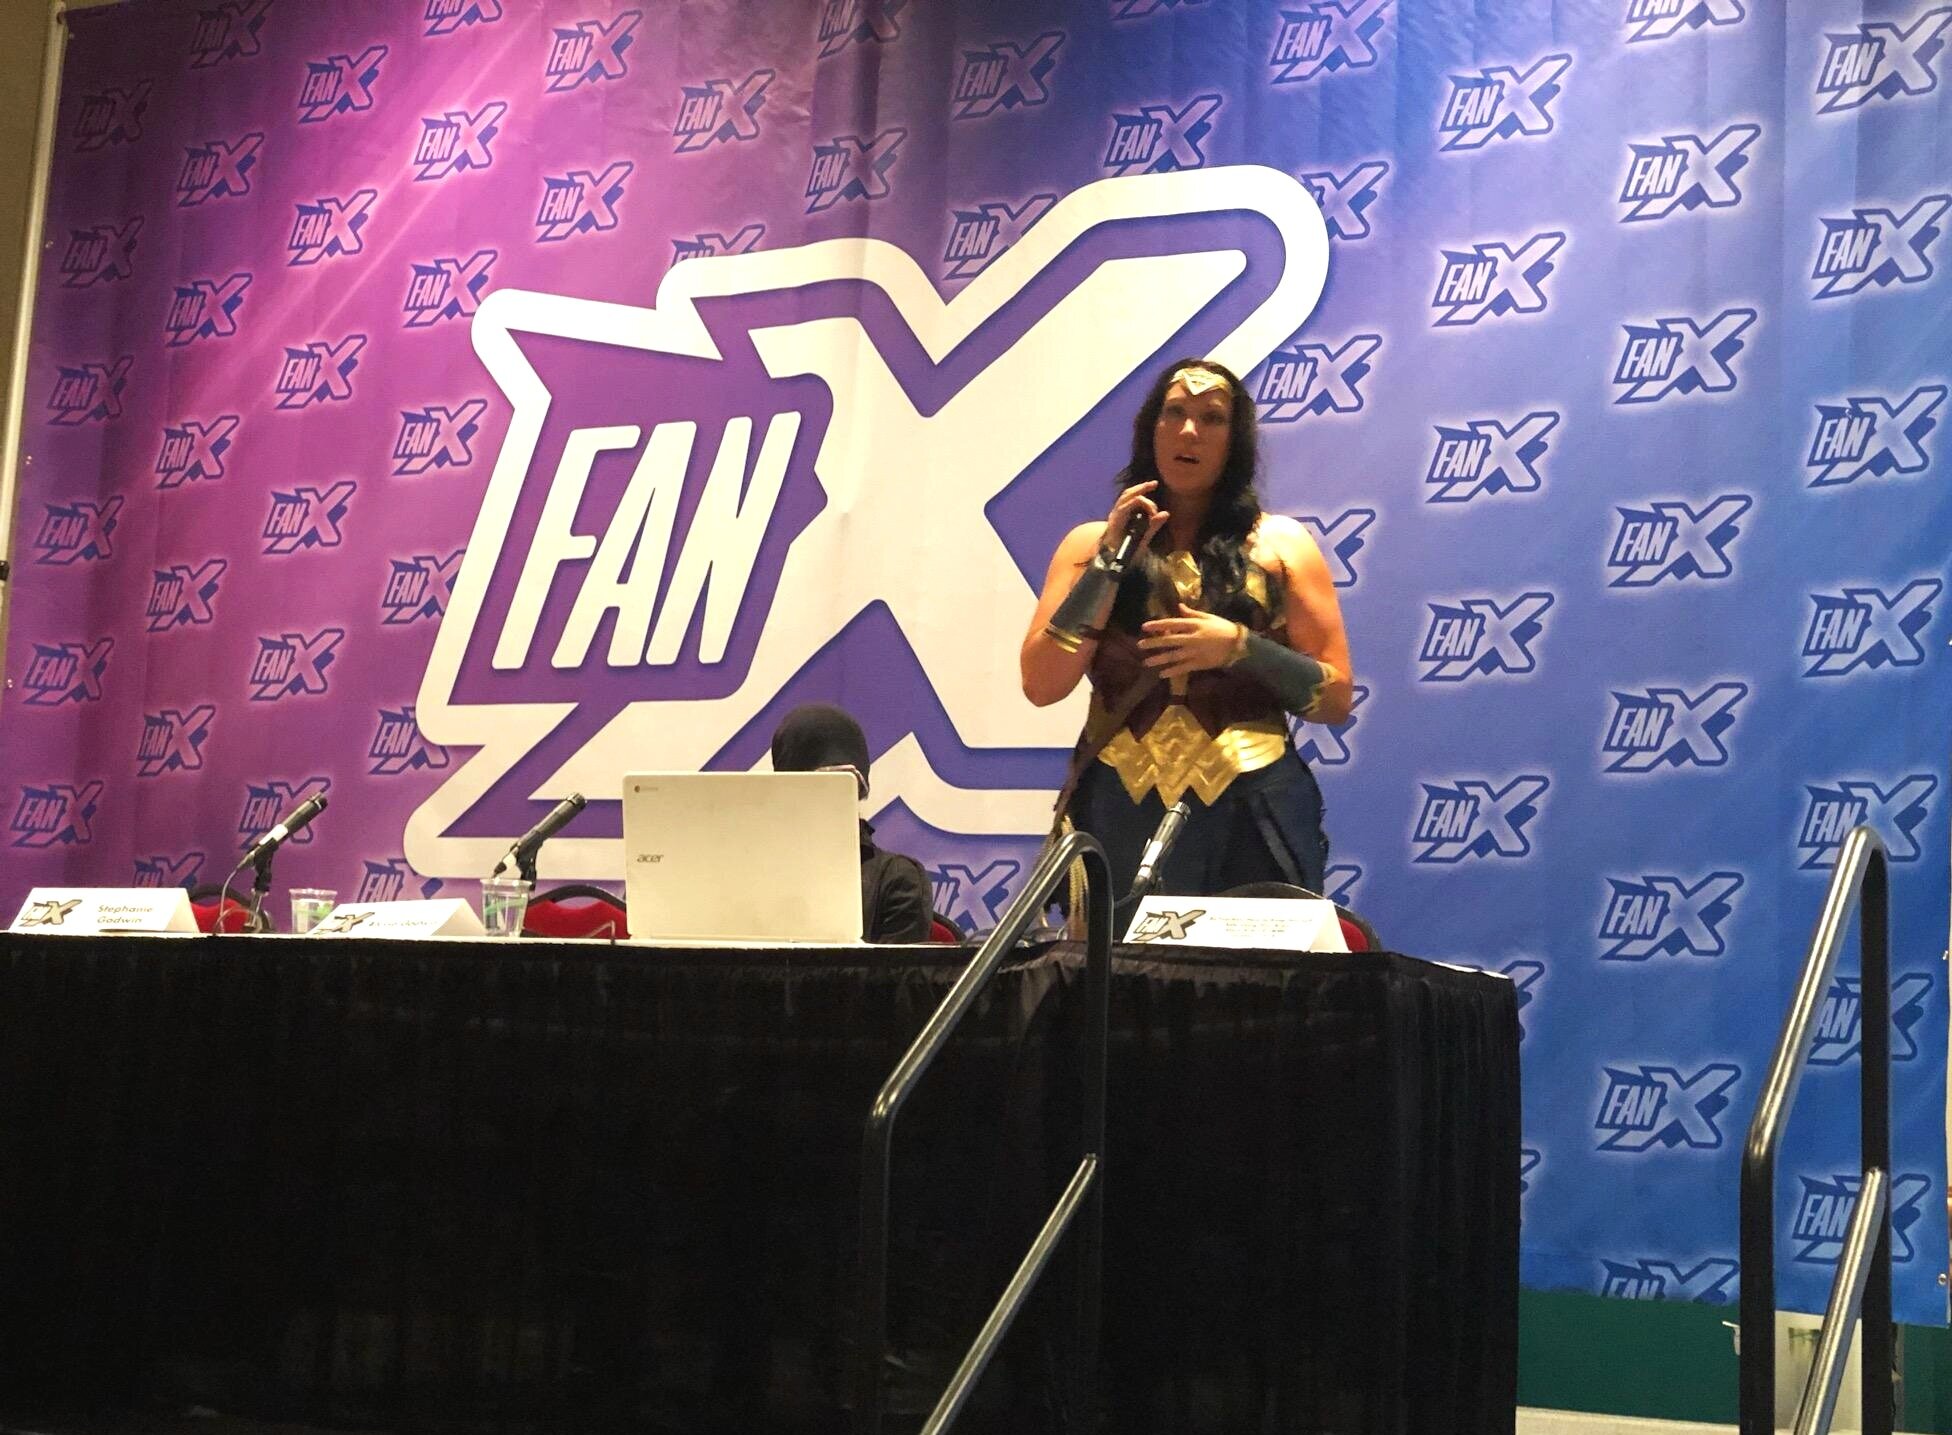 Alyssa cosplaying Wonder Woman teaches criminal deterrents at FanX